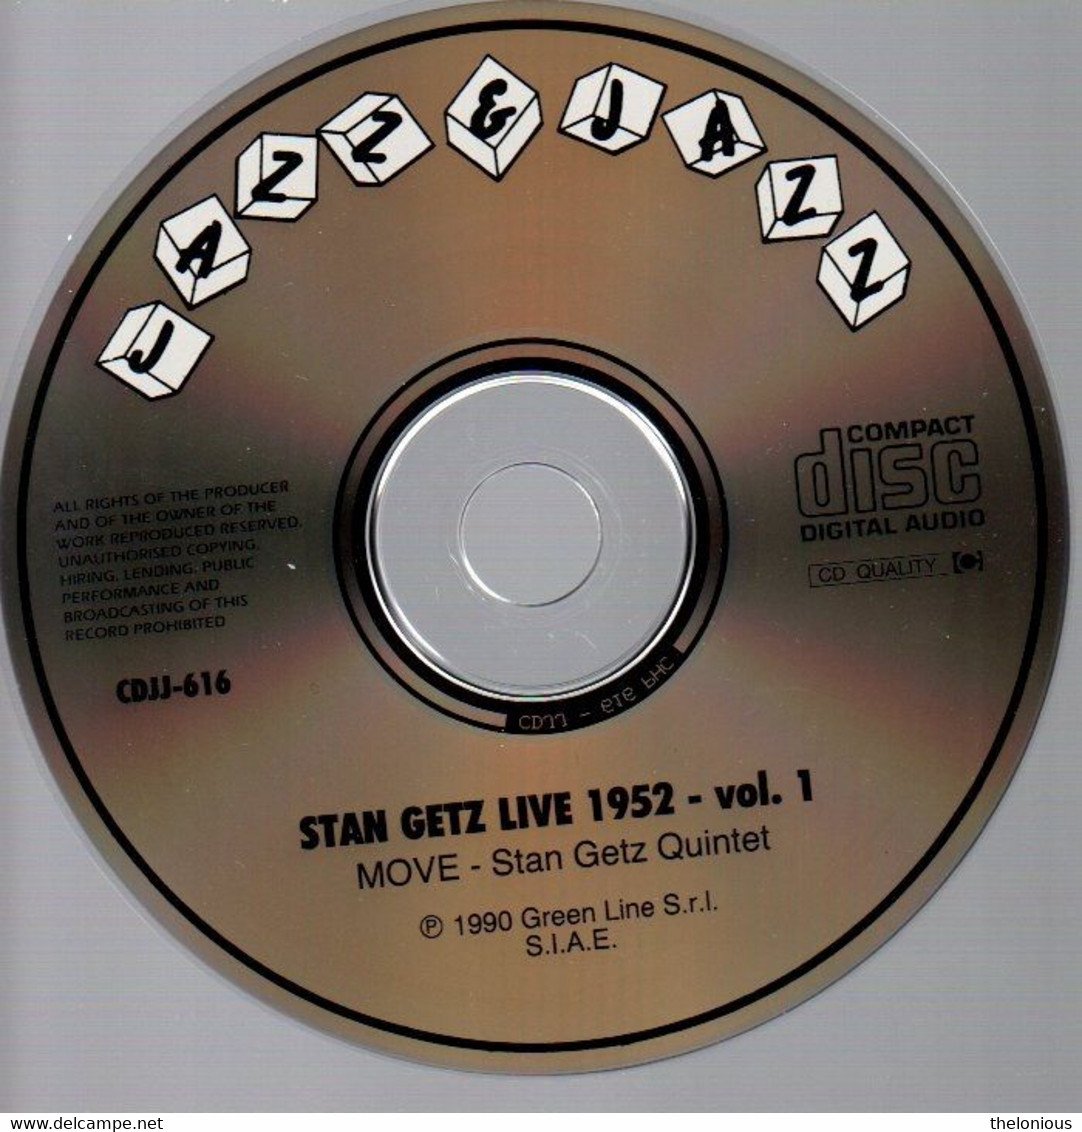 # CD: Stan Getz - Live 1952 - Volume 1 - Move - CDJJ 616 - Jazz